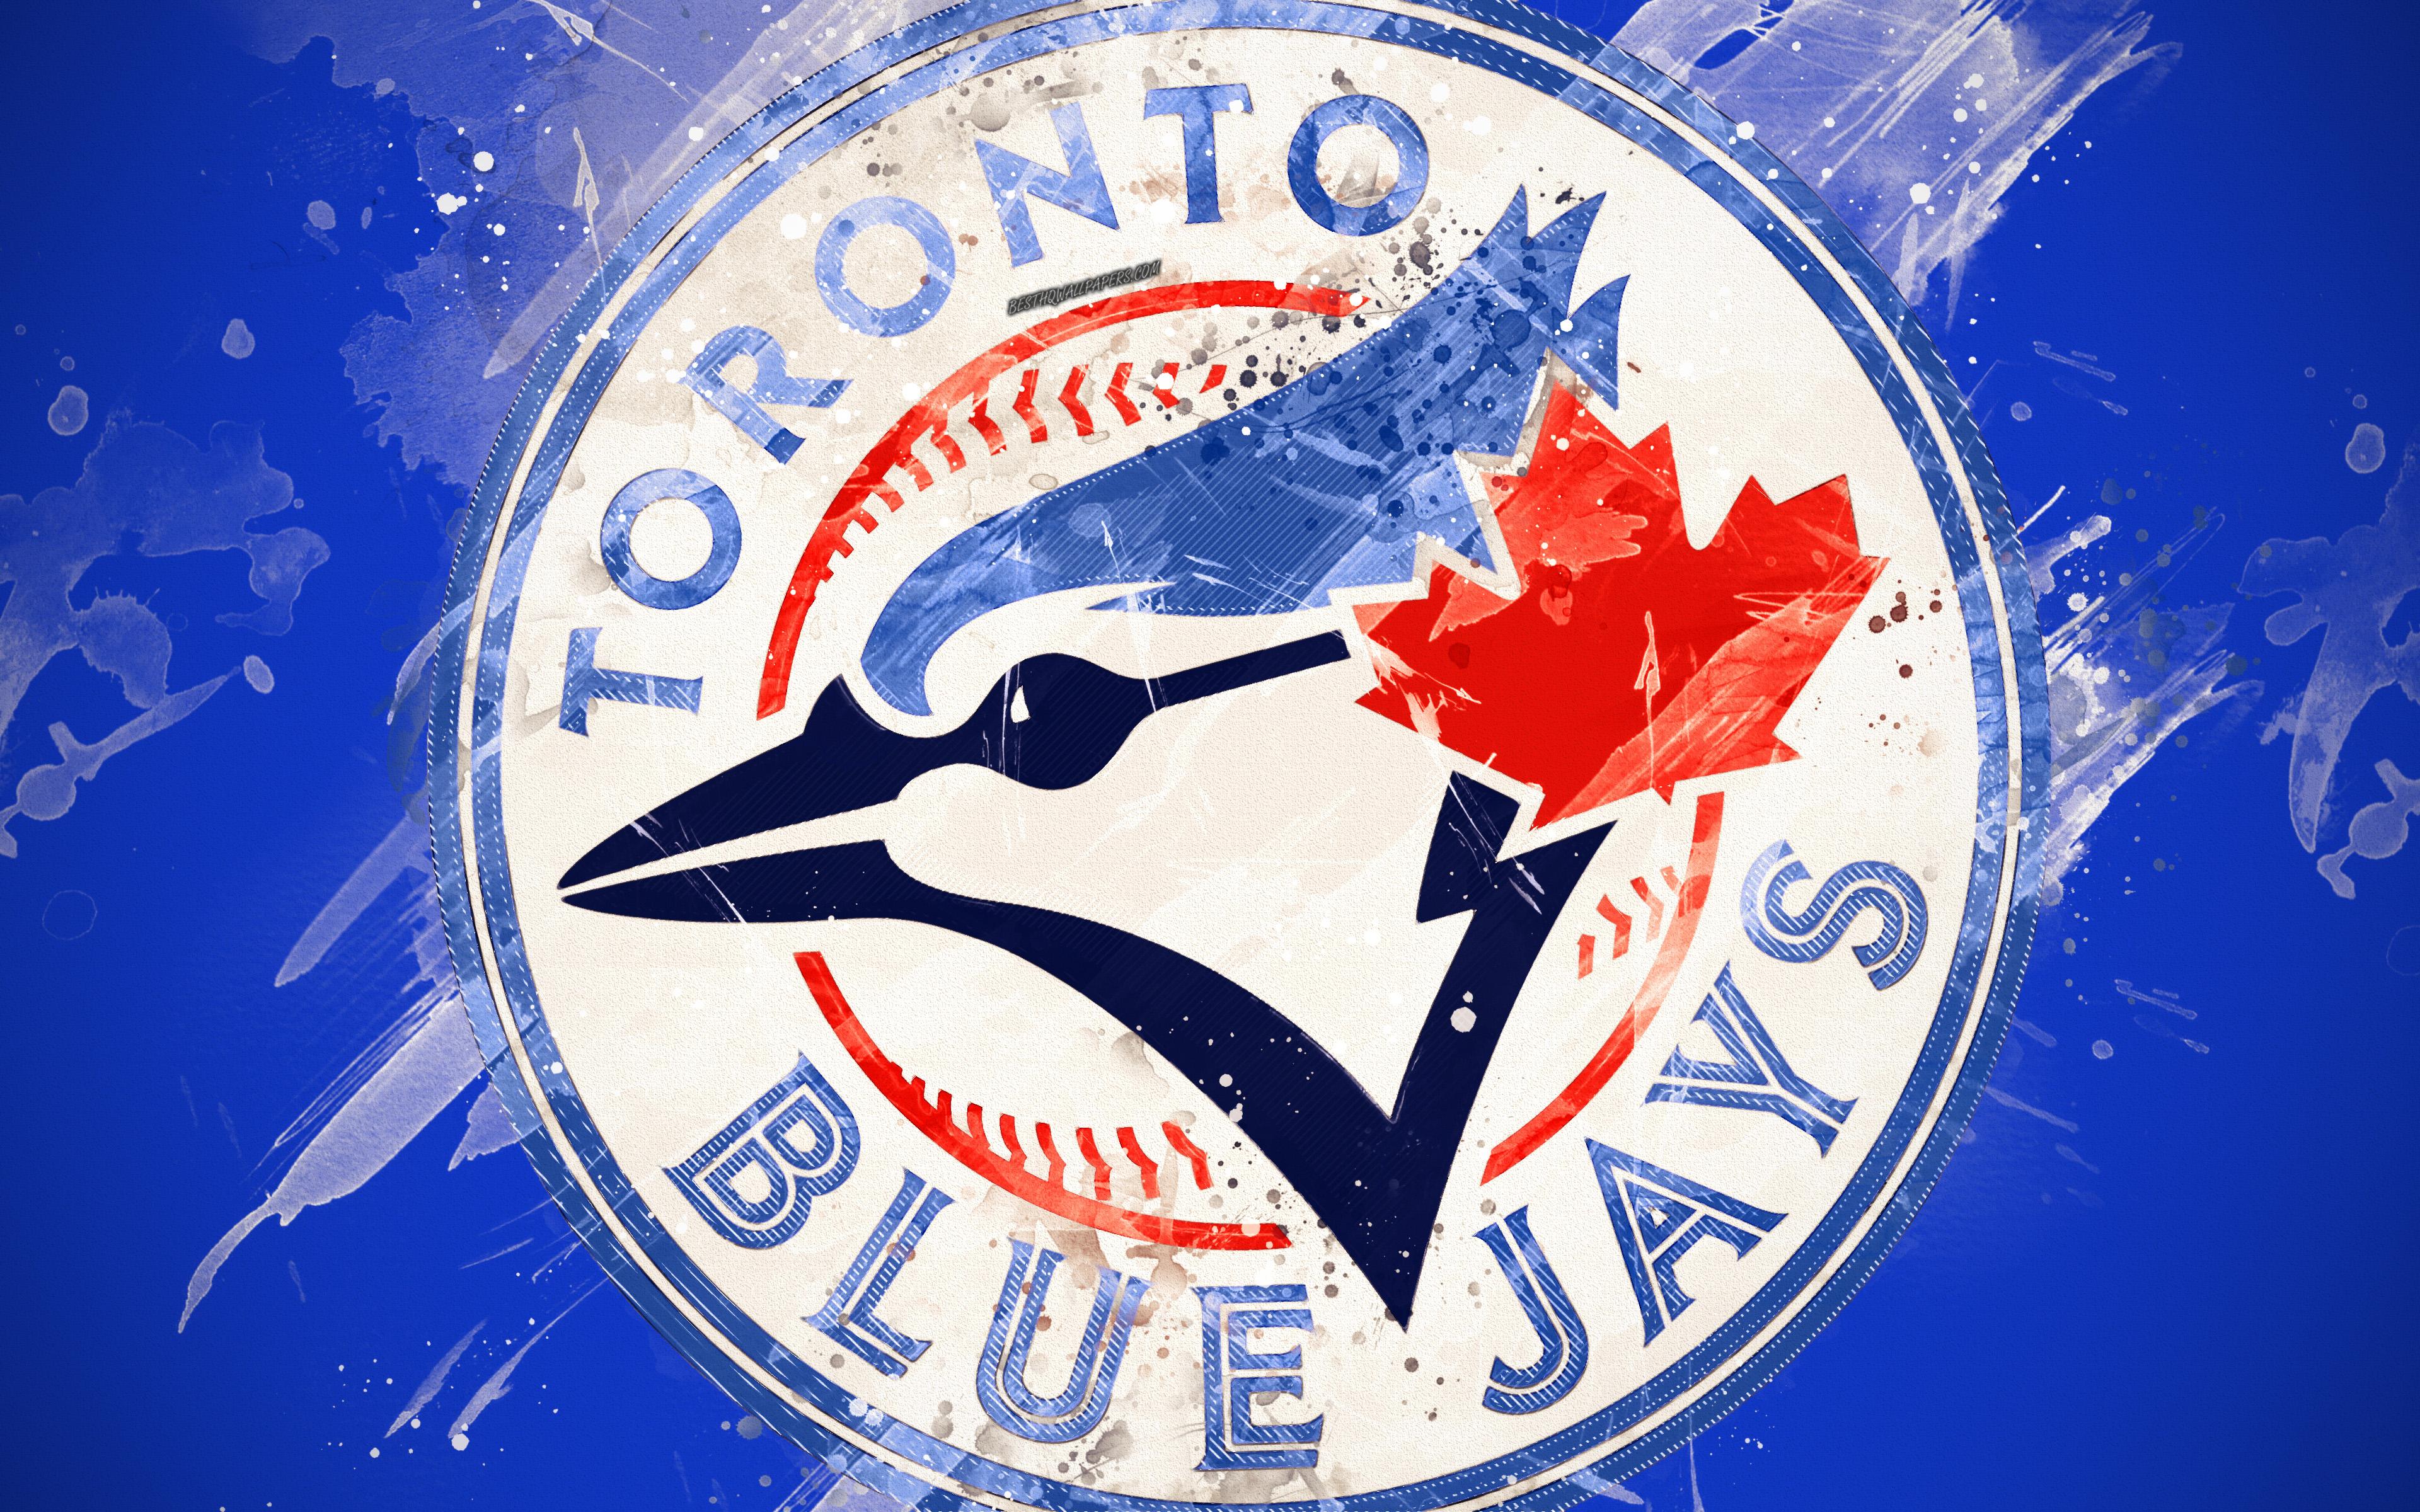 Toronto Blue Jays 2019 Wallpapers Wallpaper Cave